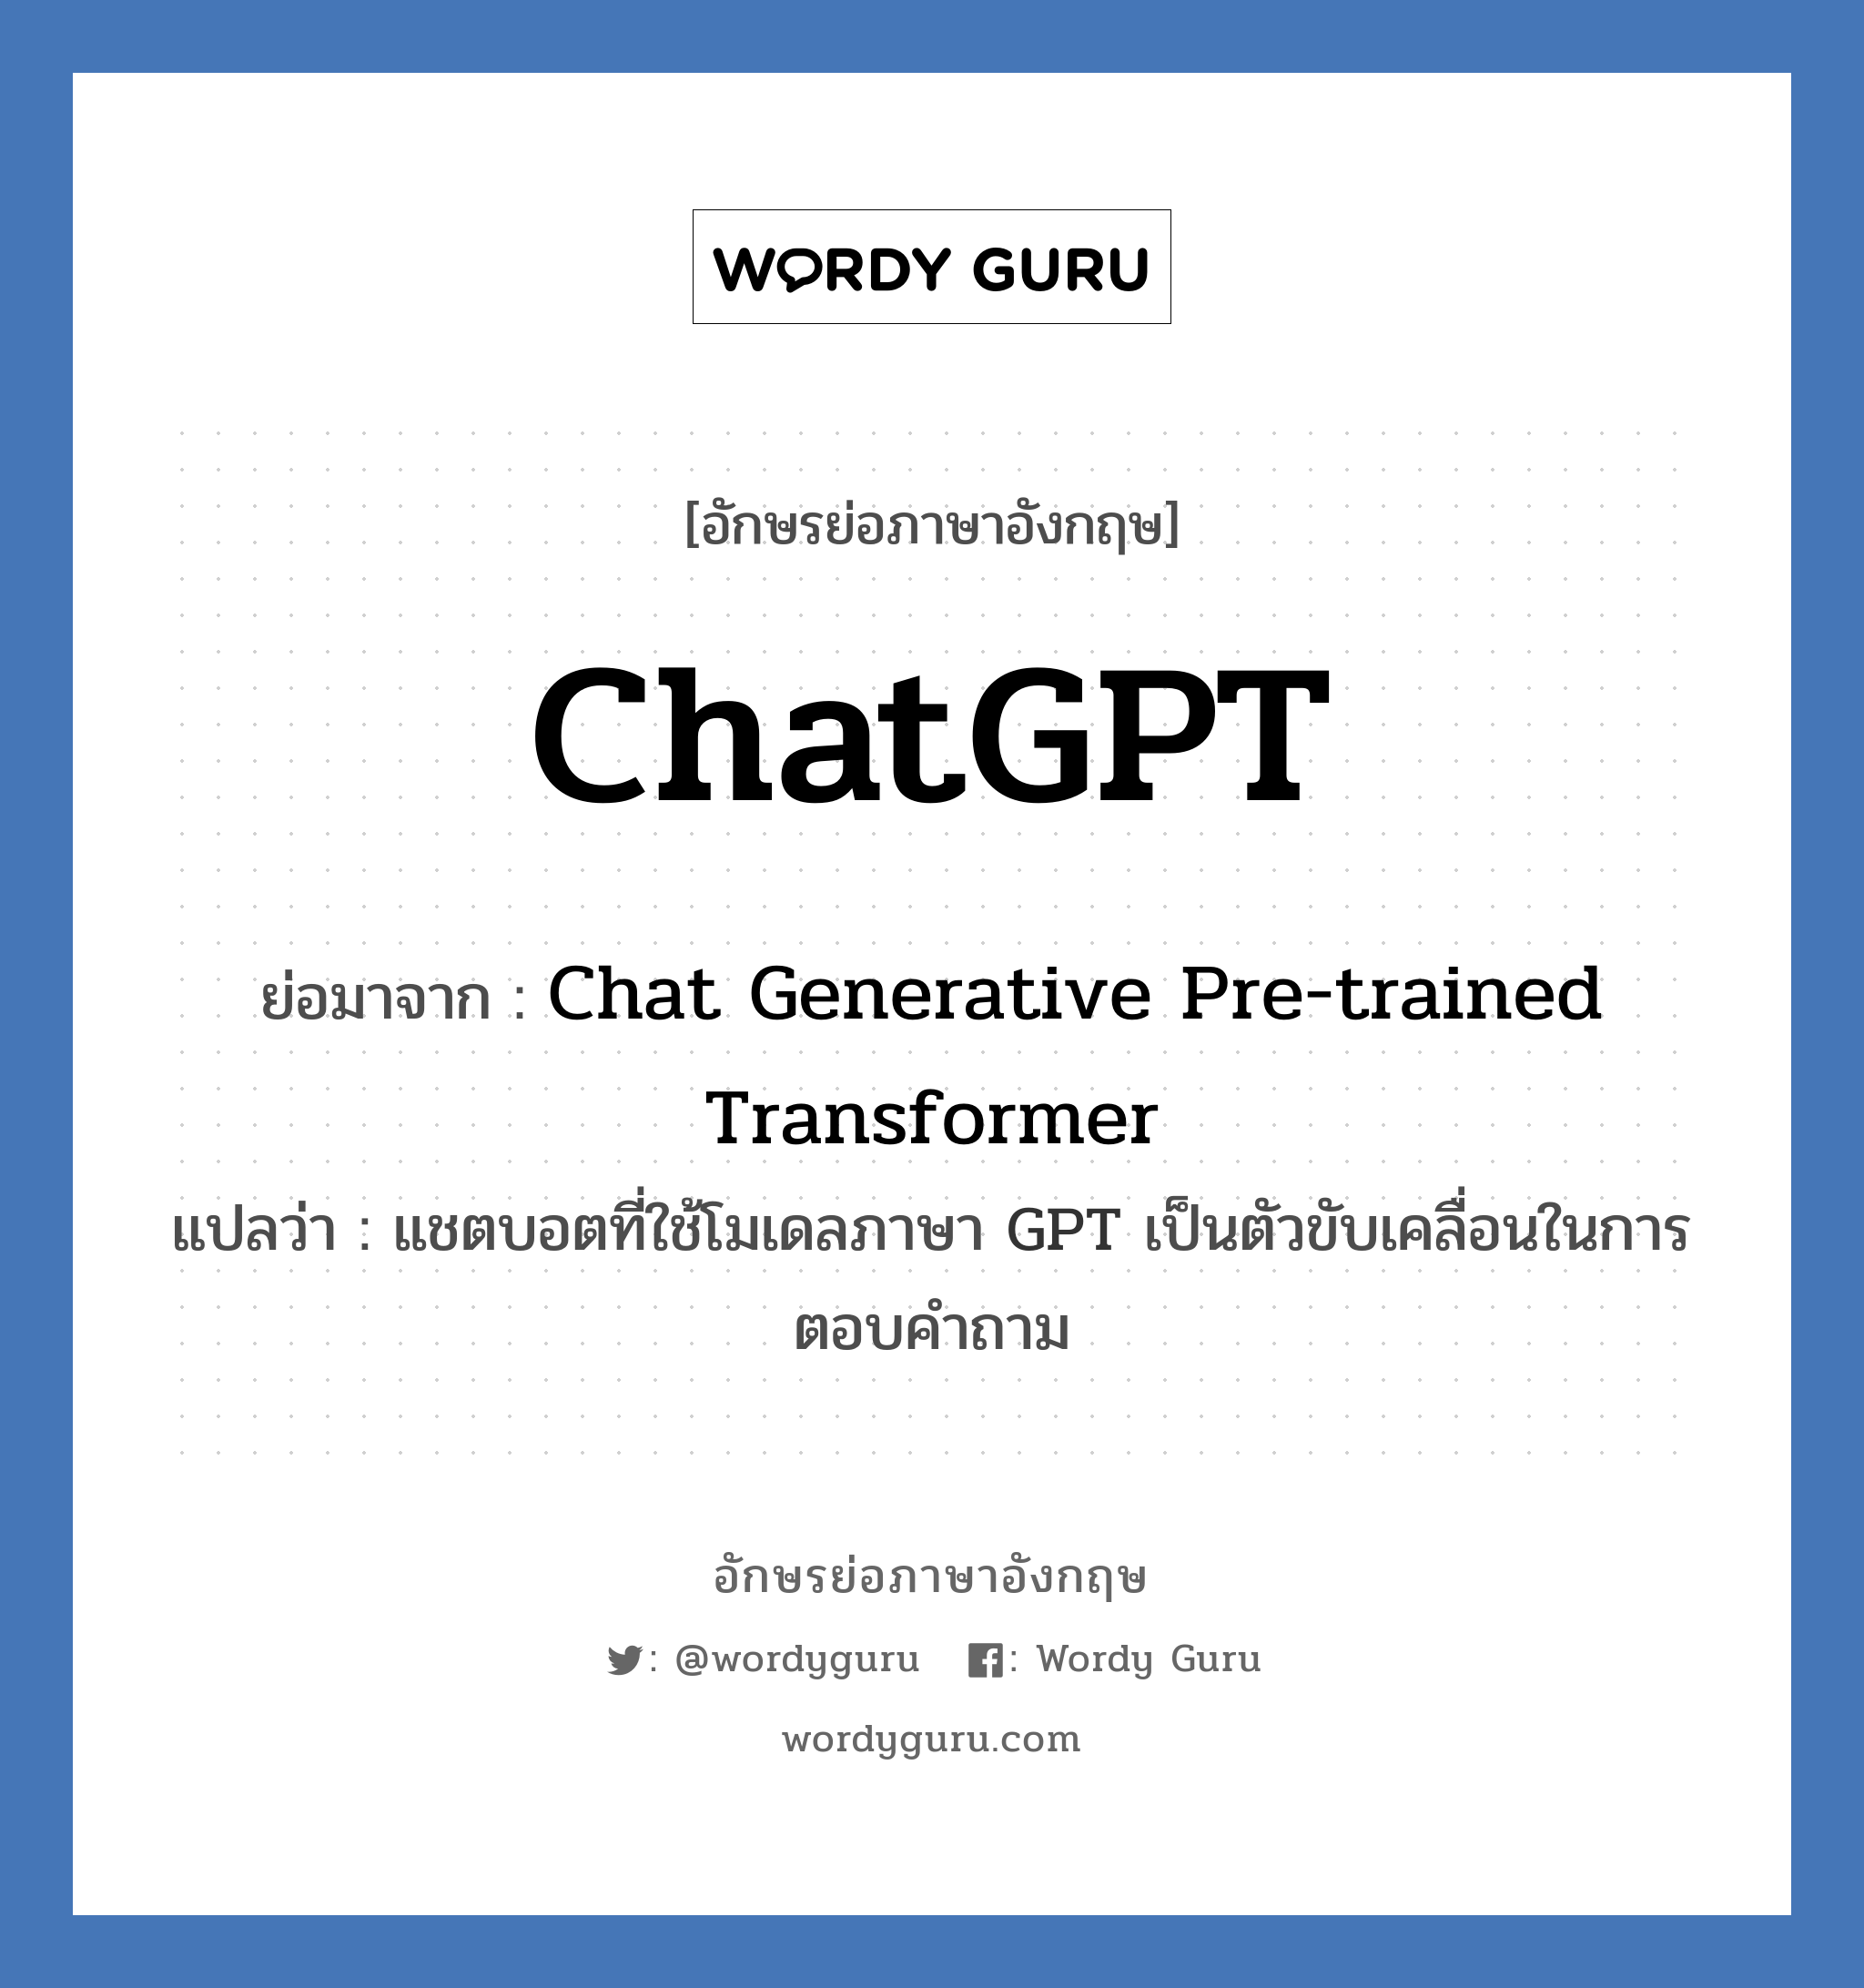 Chat Generative Pre-trained Transformer คำย่อคือ? แปลว่า?, อักษรย่อภาษาอังกฤษ Chat Generative Pre-trained Transformer ย่อมาจาก ChatGPT แปลว่า แชตบอตที่ใช้โมเดลภาษา GPT เป็นตัวขับเคลื่อนในการตอบคำถาม หมวด IT